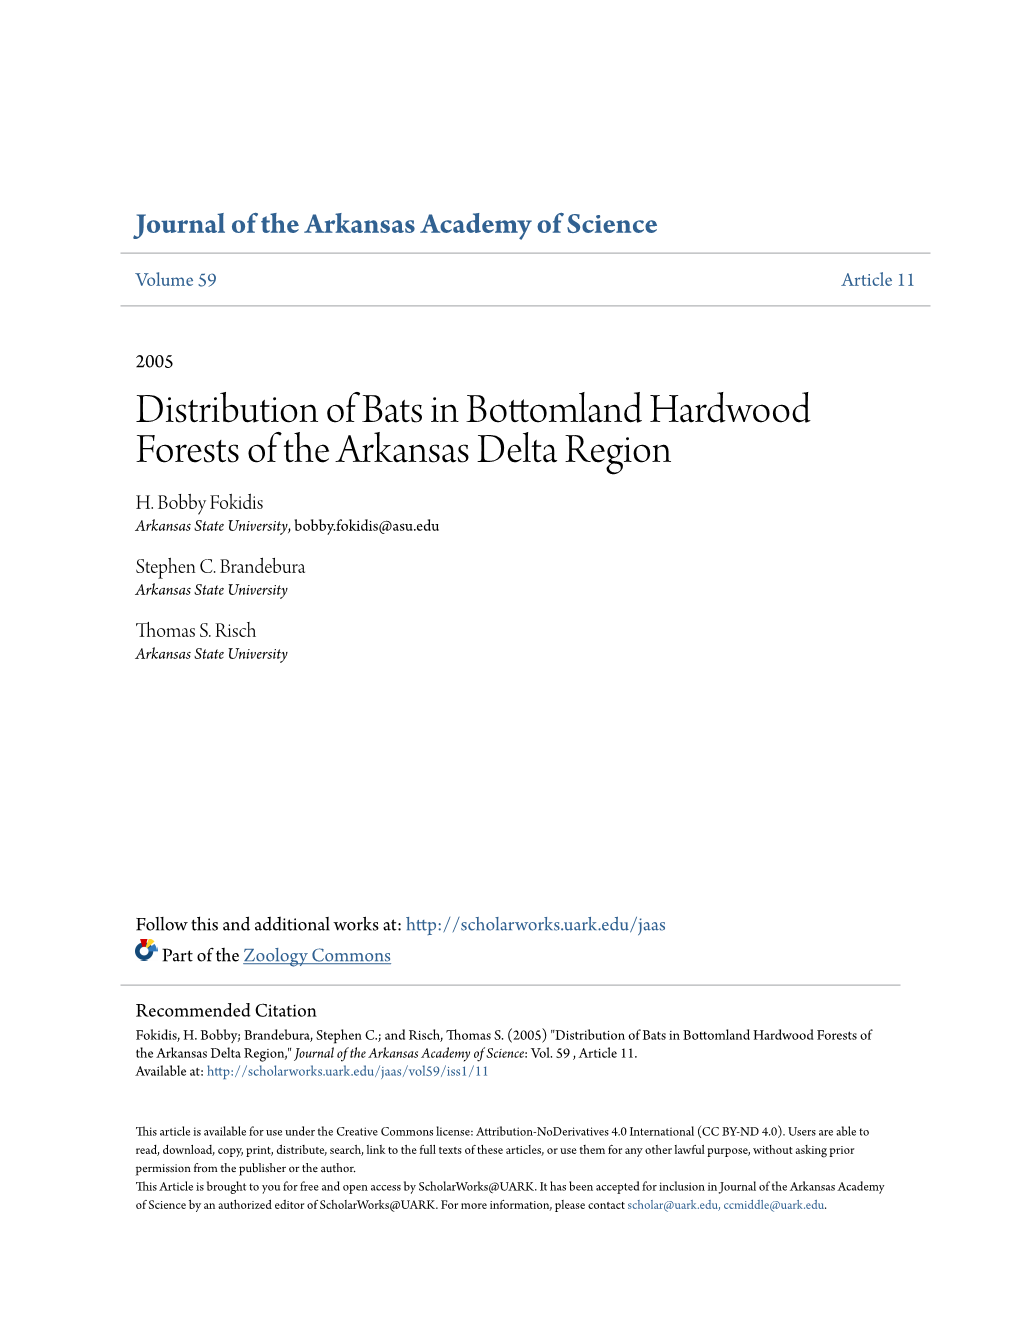 Distribution of Bats in Bottomland Hardwood Forests of the Arkansas Delta Region H